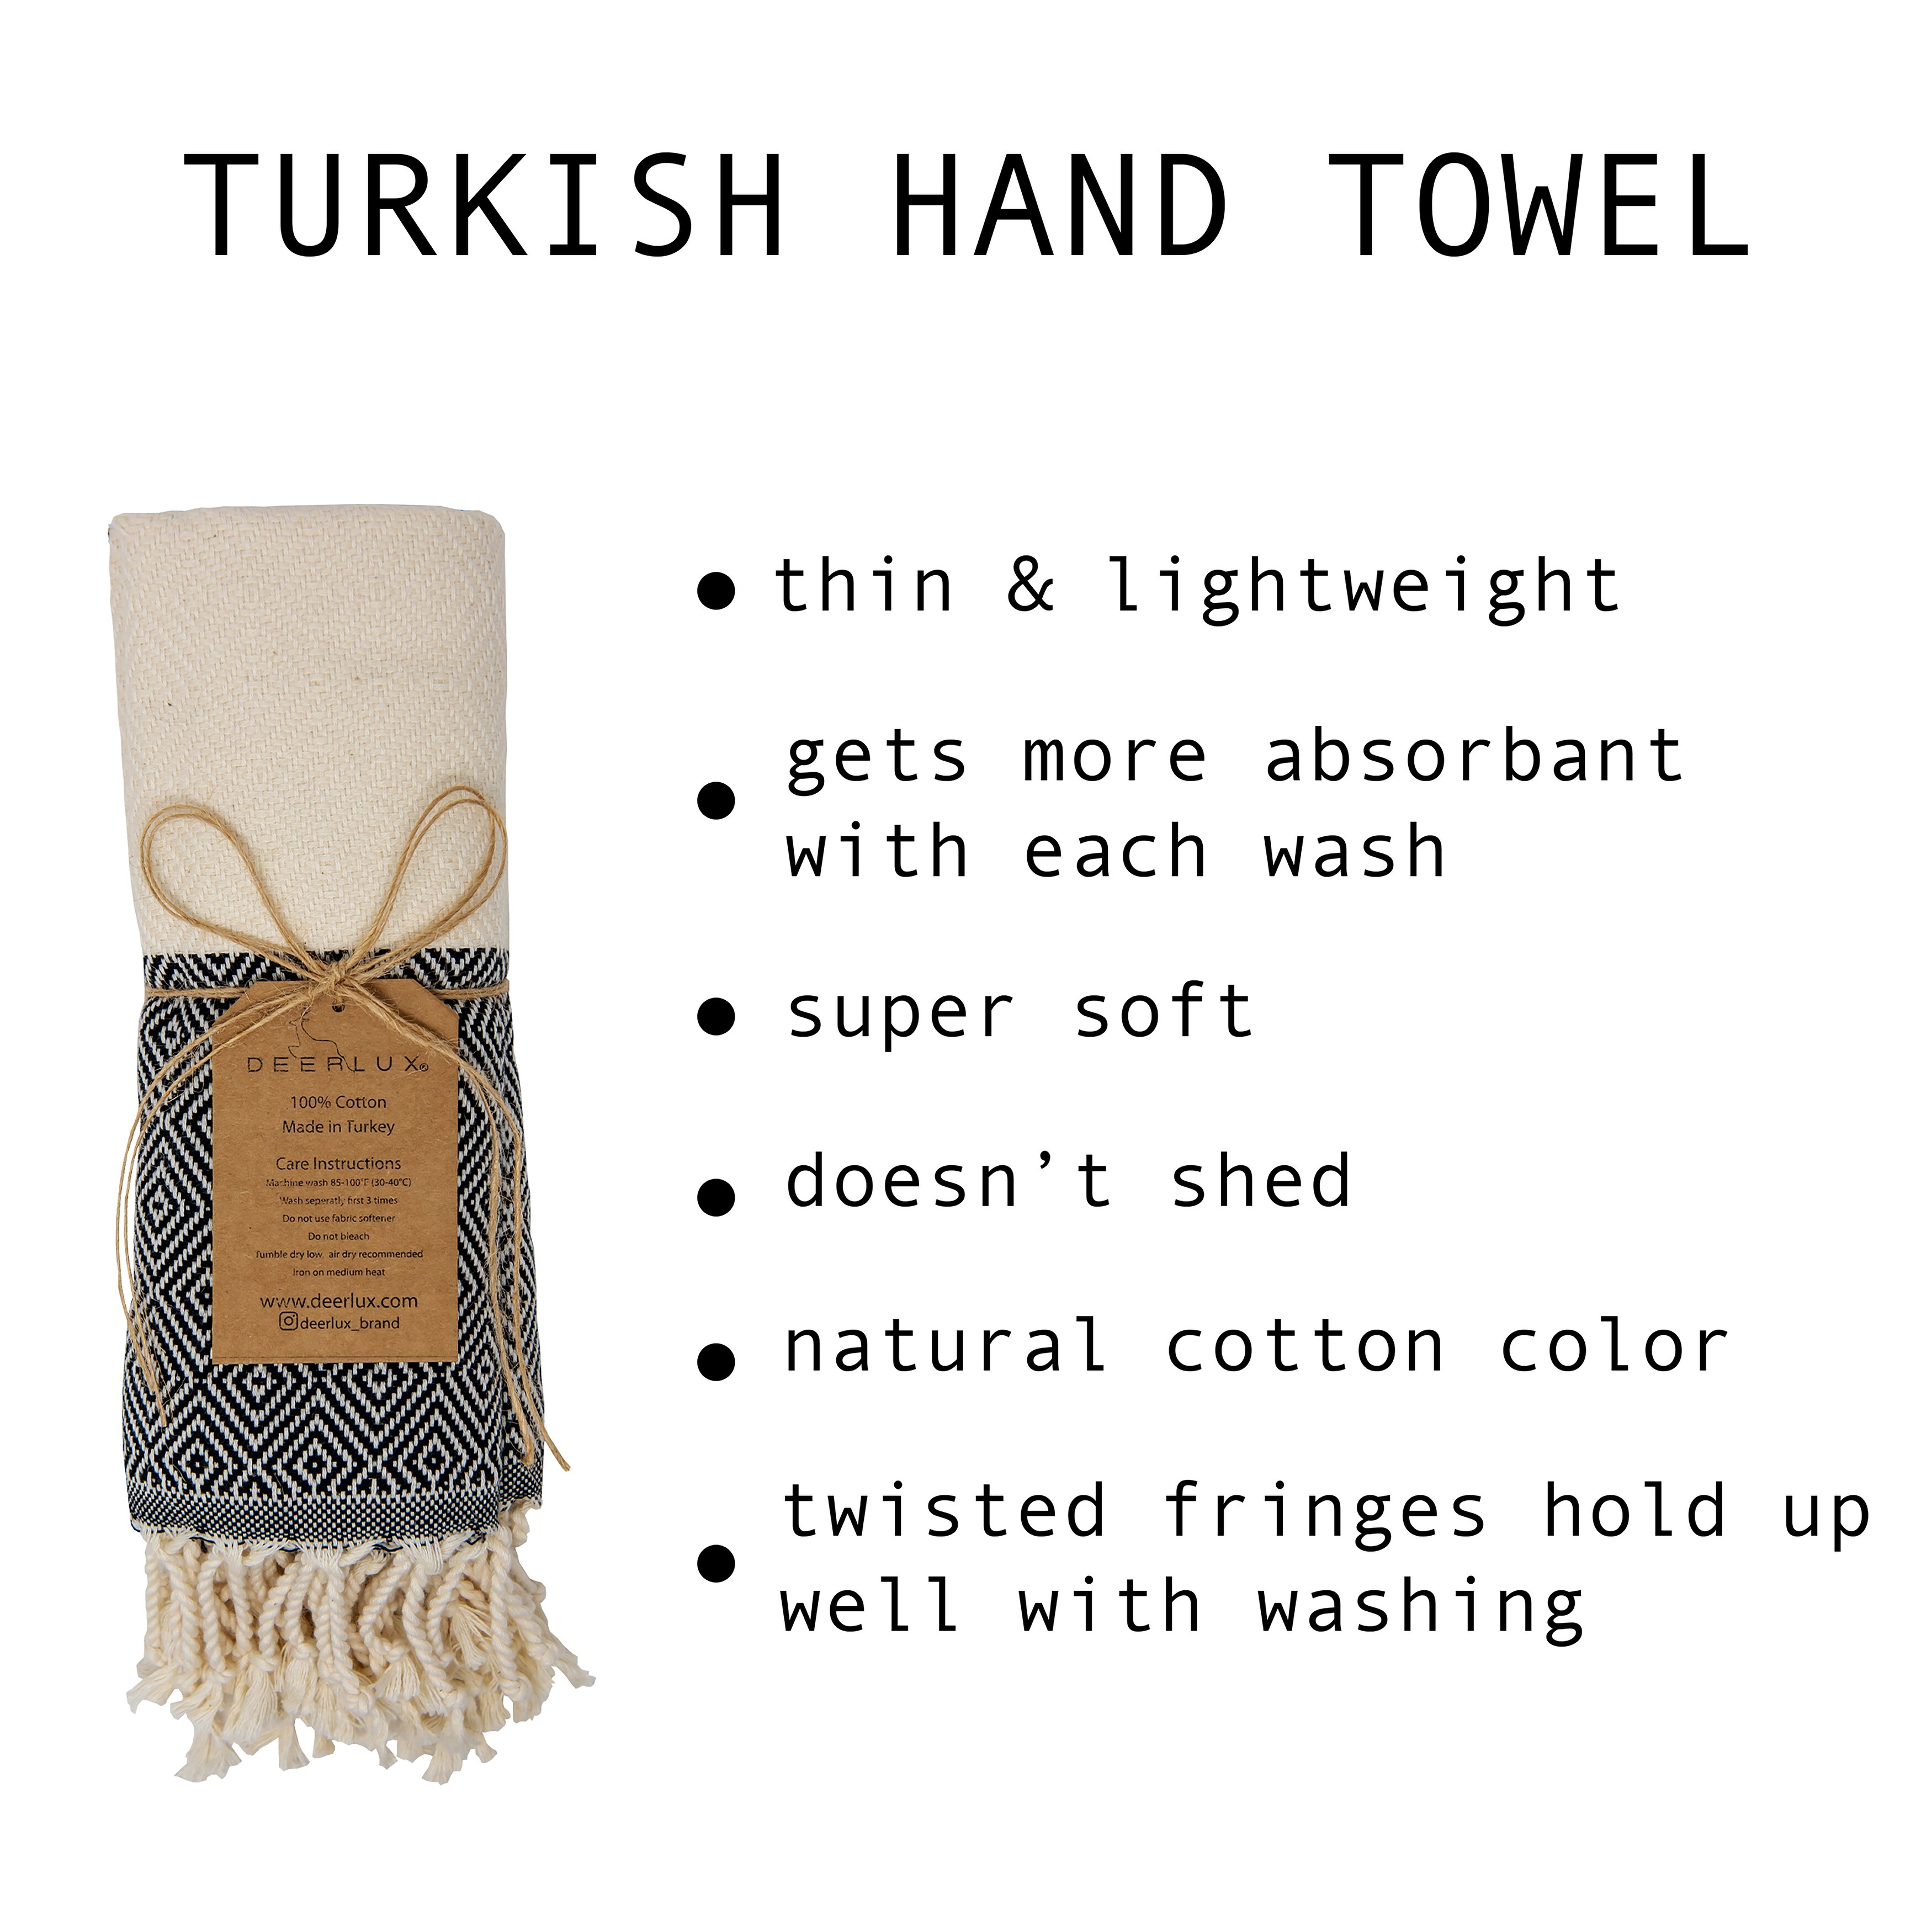 https://ak1.ostkcdn.com/images/products/is/images/direct/be5cece67a2884c179d4dd8aabee254d0b182274/Deerlux-100%25-Cotton-Turkish-Hand-Towels%2C-Set-of-2-18%22-x-40%22-Diamond-Peshtemal-Kitchen-and-Bath-Towels.jpg